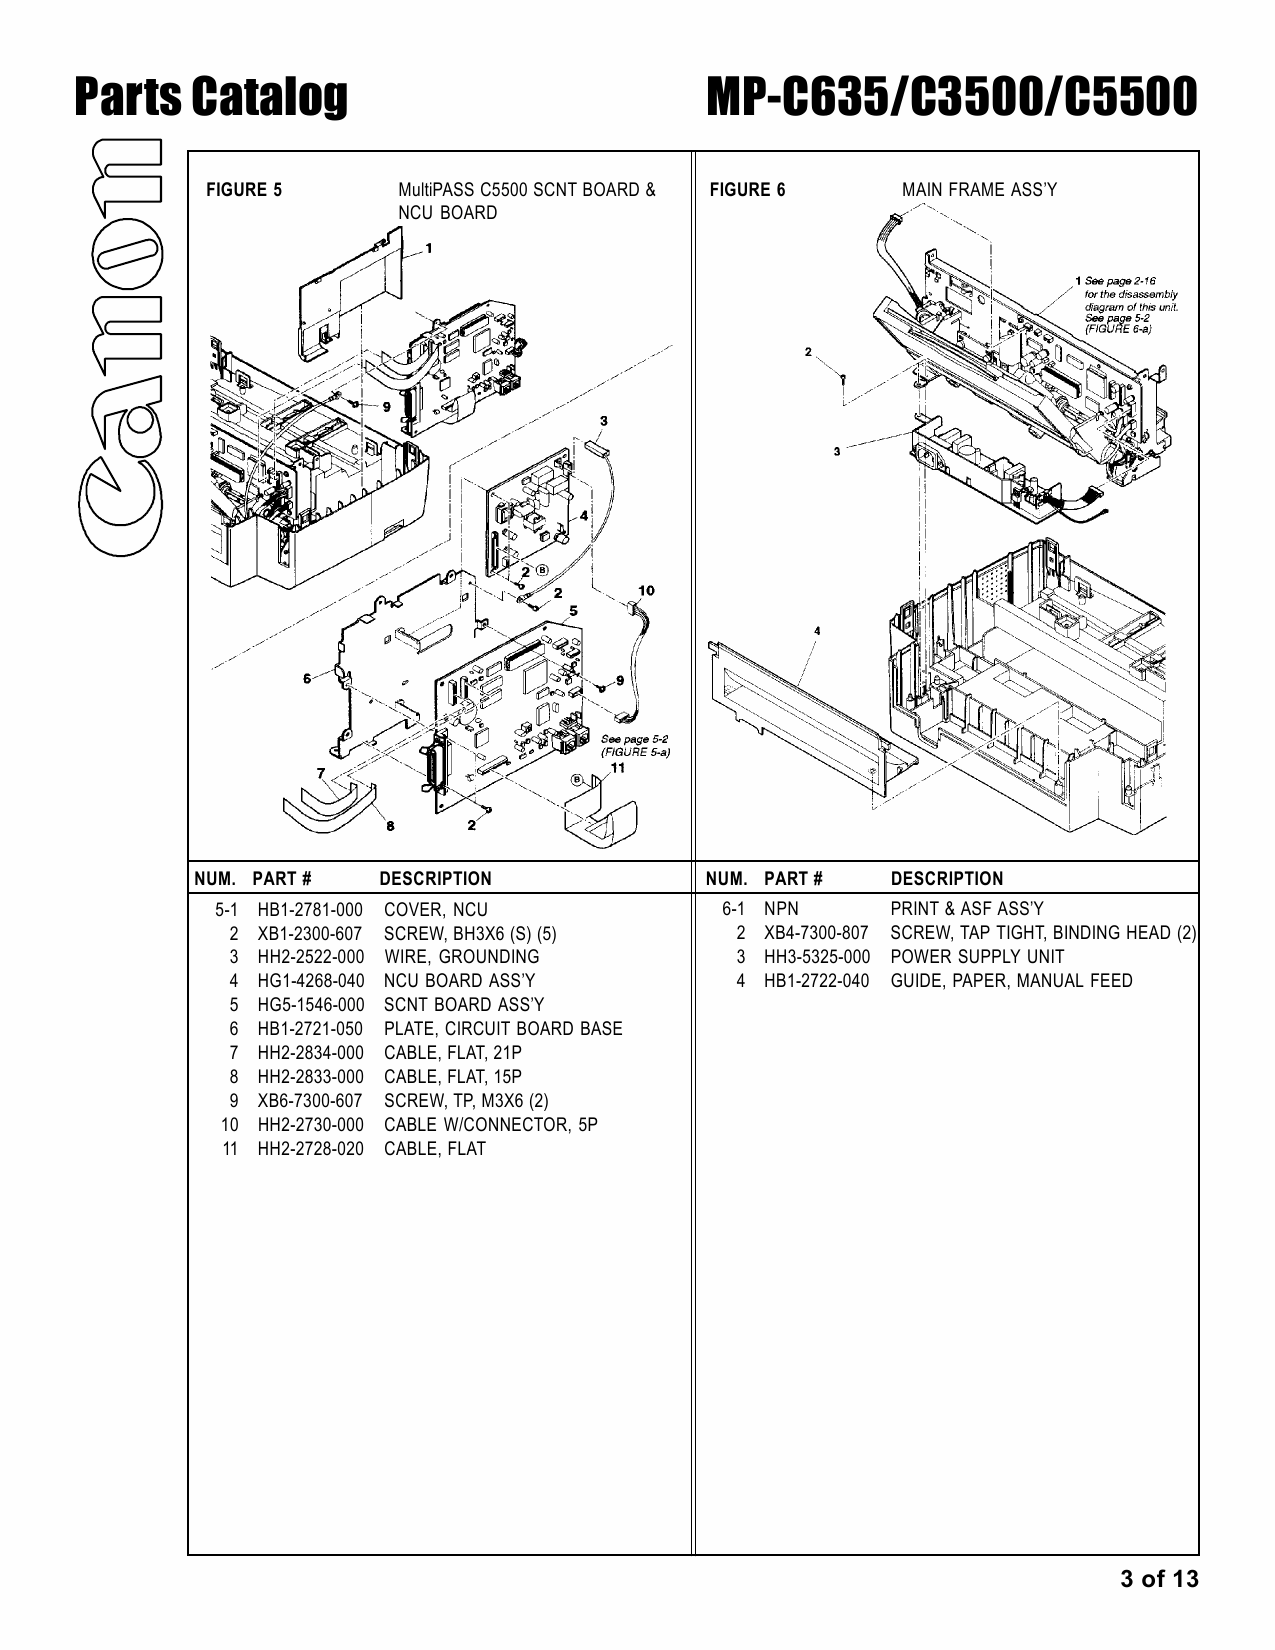 Canon MultiPASS MP-C635 C3500 C5500 Parts Catalog Manual-3